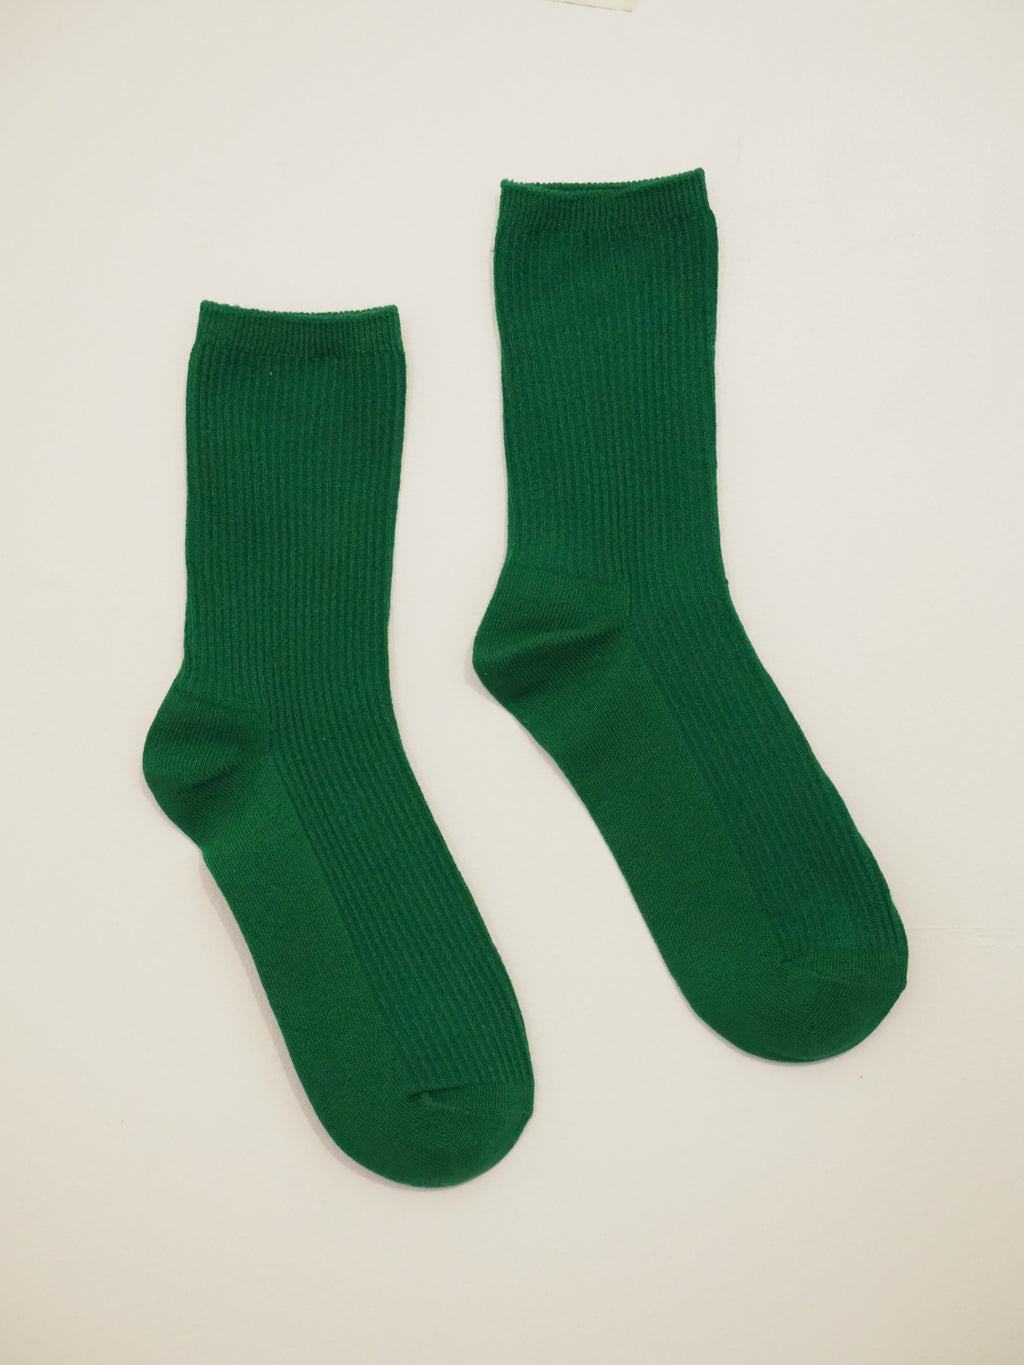 S O K K E N Ribbed socks - Parsley